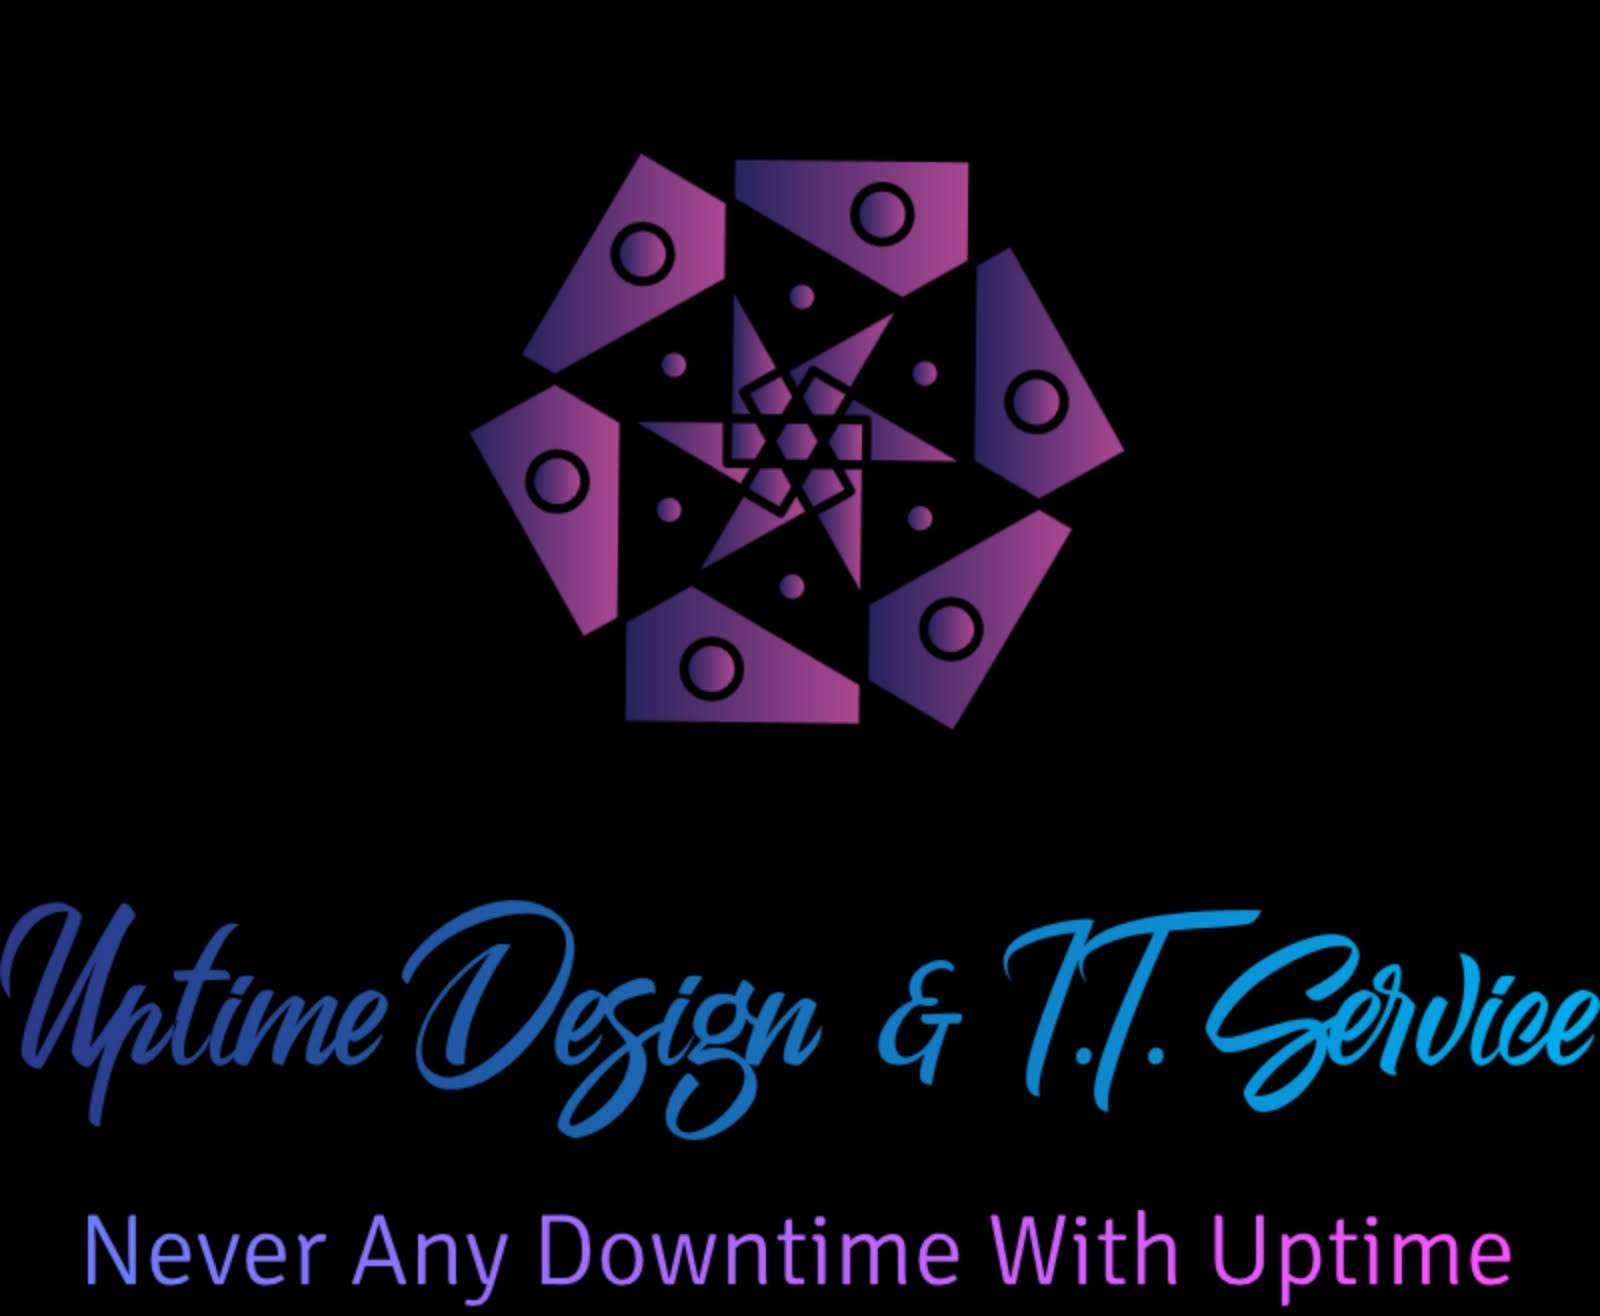 UpTime Designs & I.T. Services